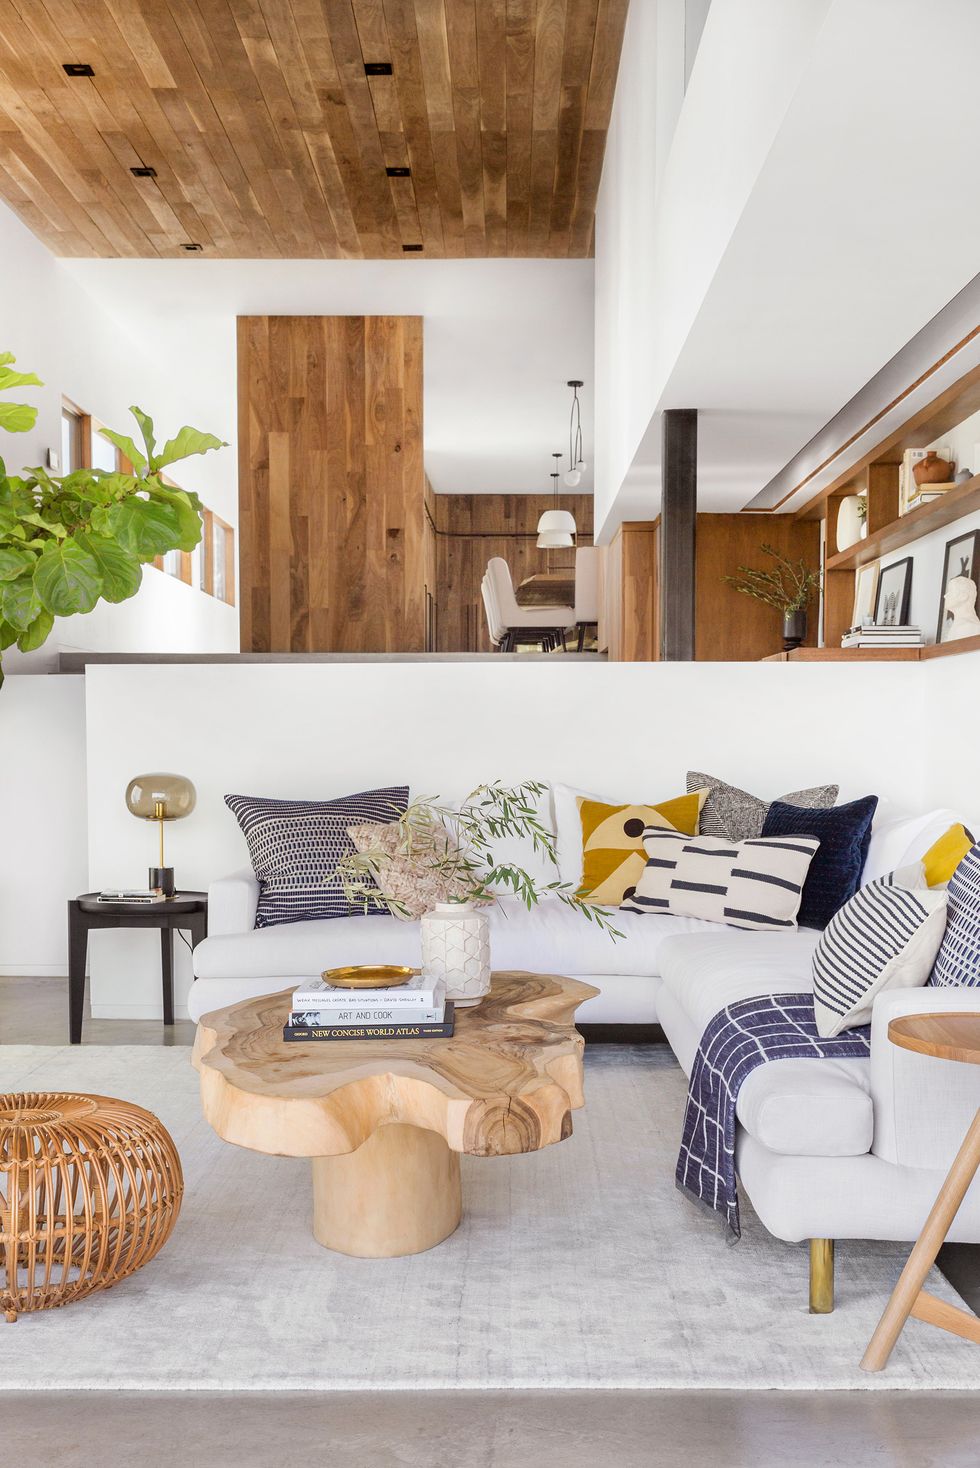 How To Decorate a Loft - 12 Stylish Loft Apartment Design Ideas